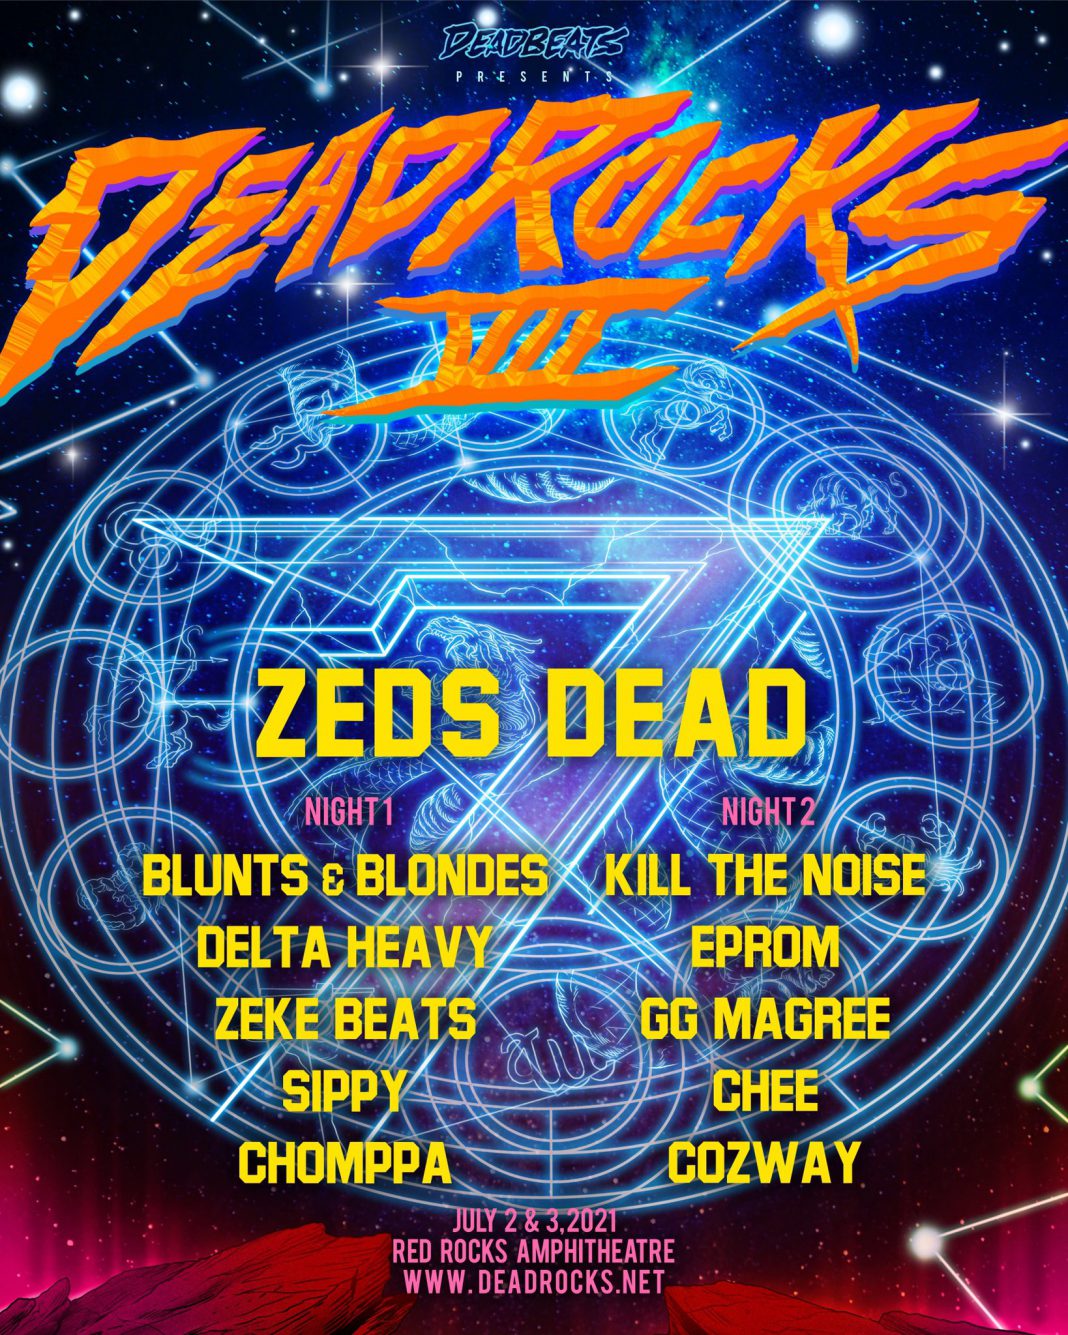 Zeds Dead Releases Lineup for Deadrocks VII EDM Identity